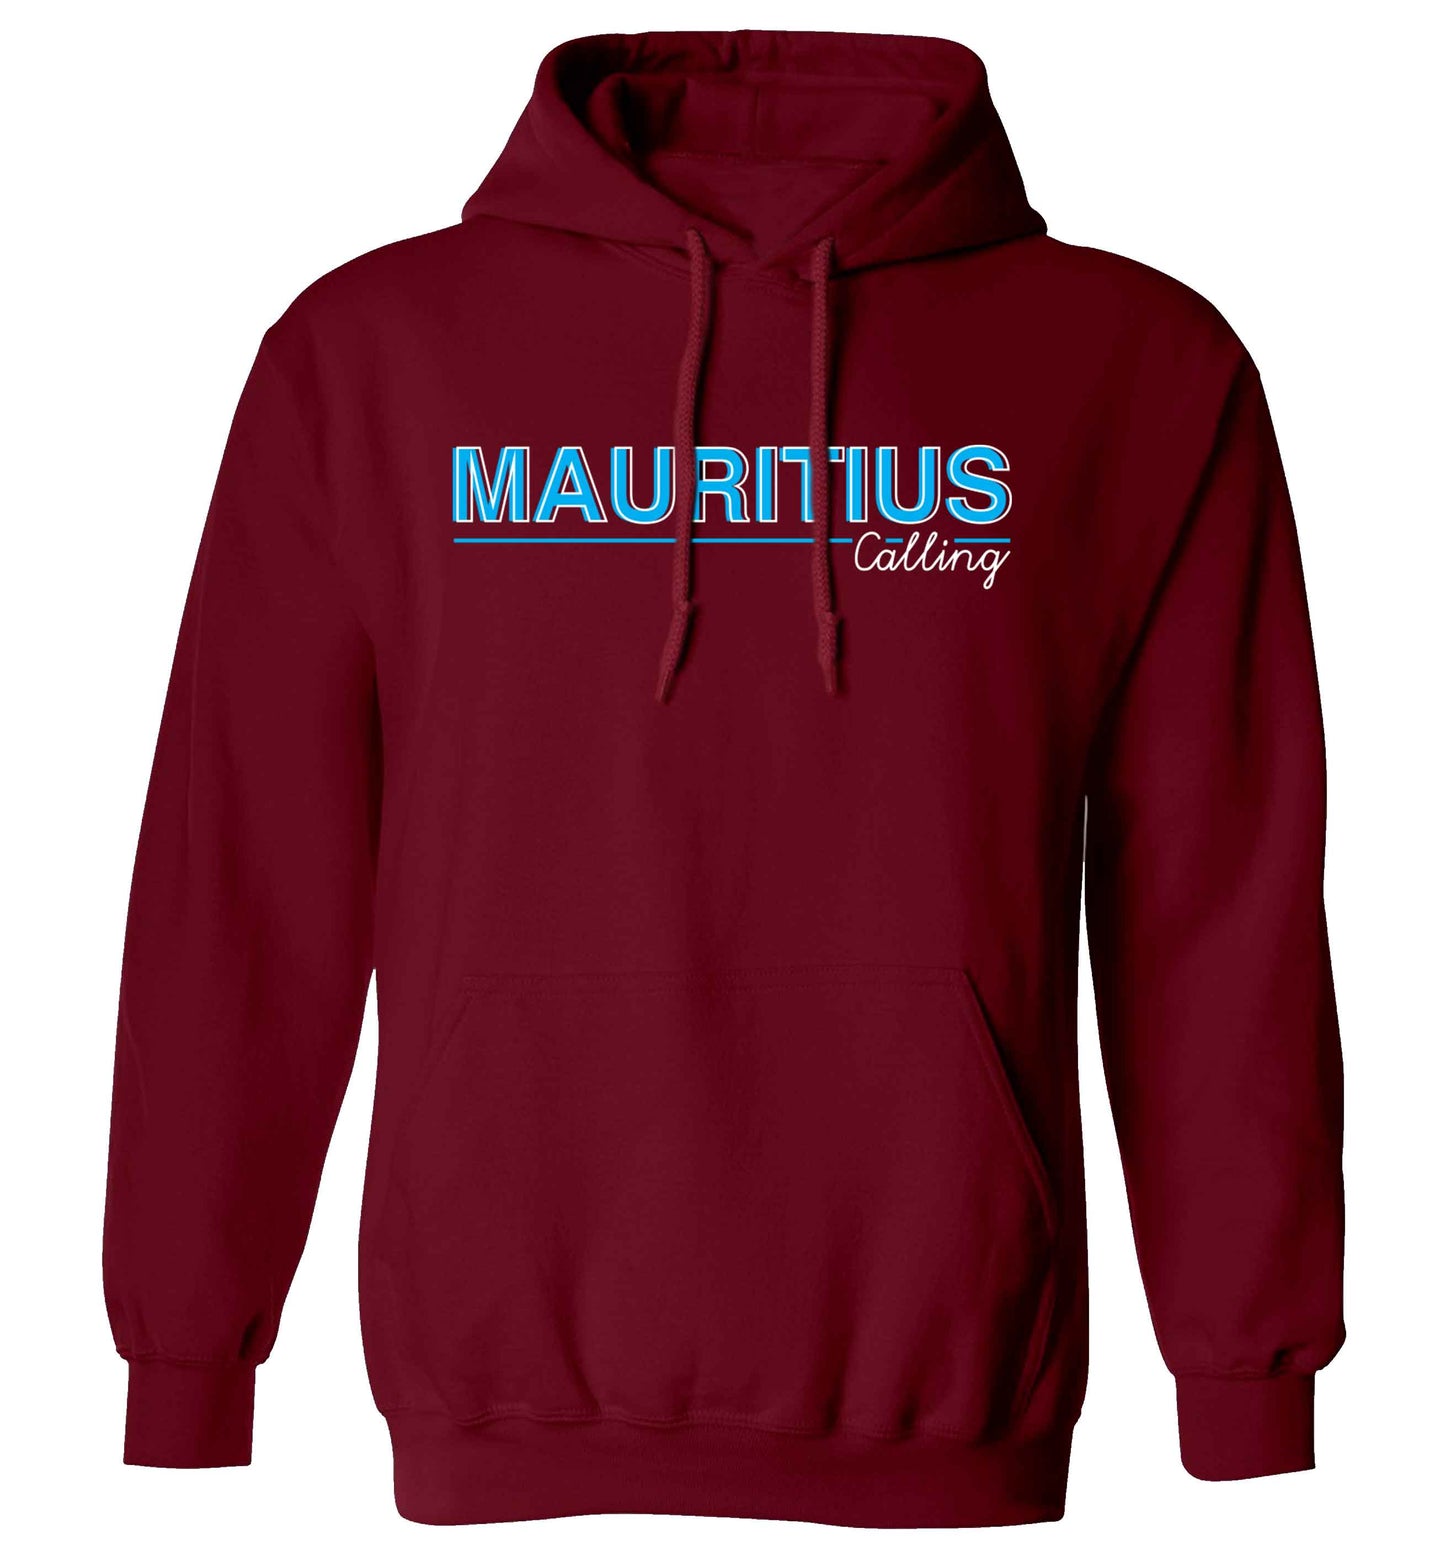 Mauritius calling adults unisex maroon hoodie 2XL